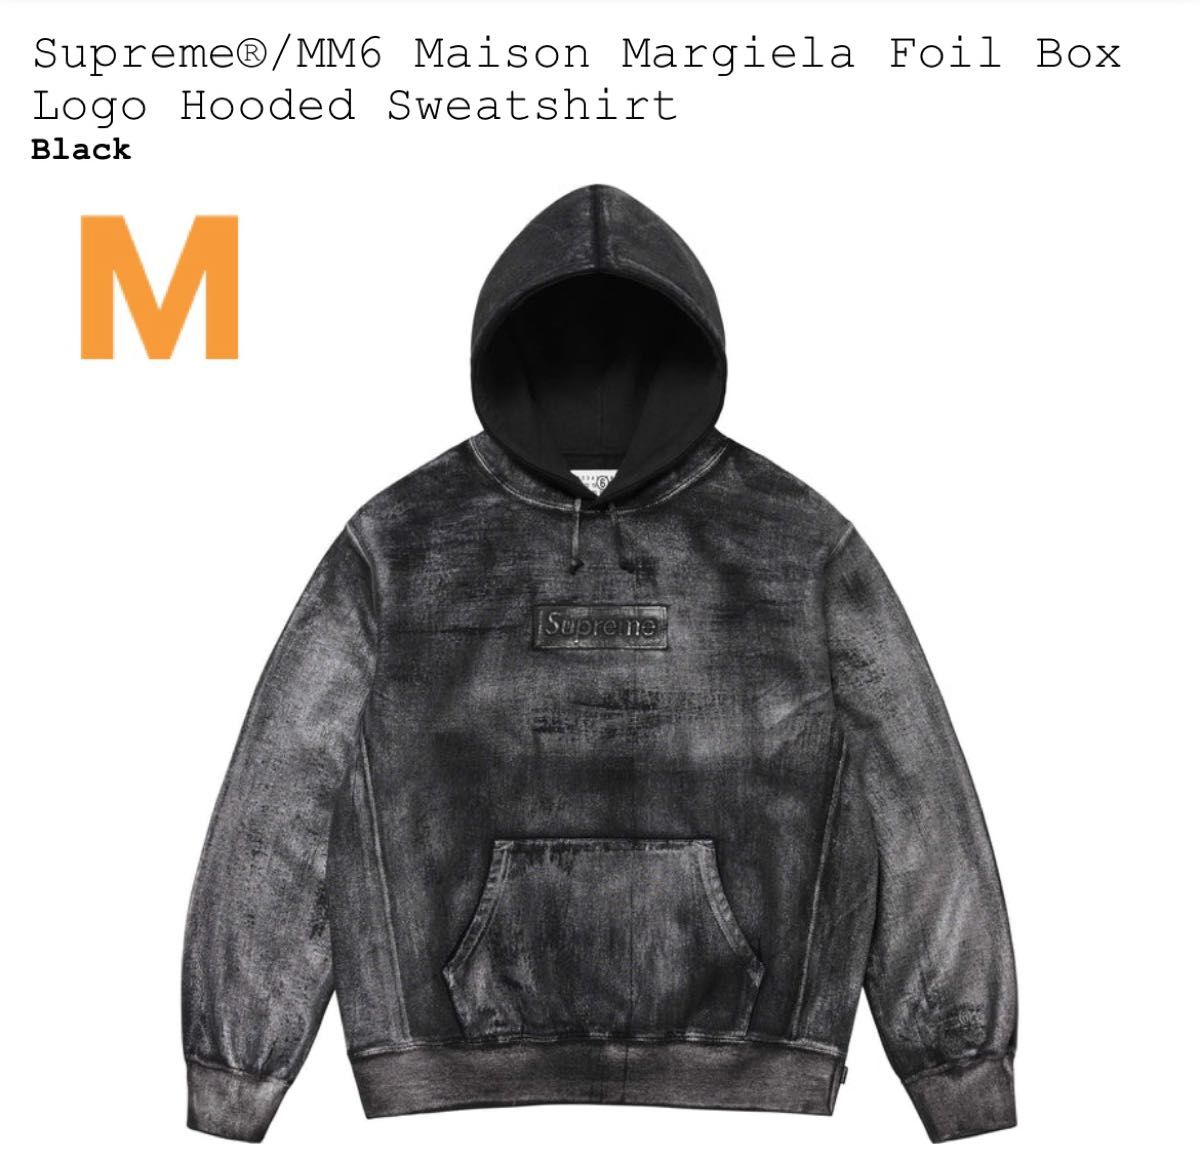 Supreme MM6 Maison Margiela Foil Box Logo Hooded Sweatshirt